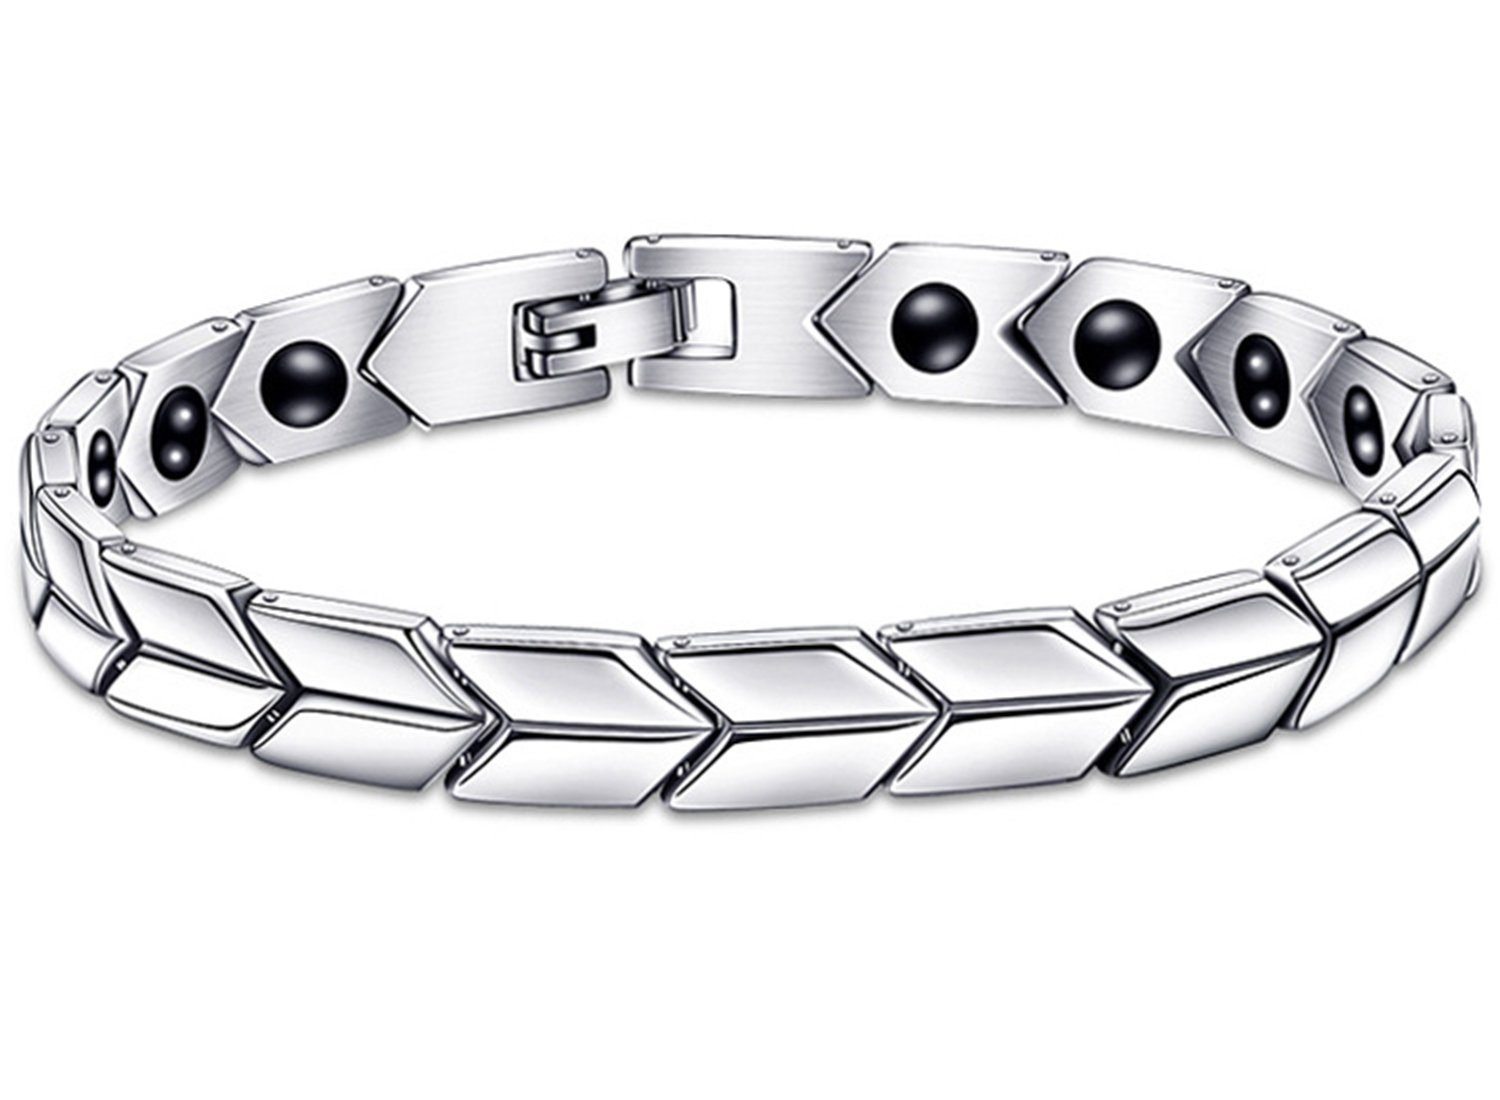 Bettelarmband für Damen Gliederarmband,Magnet Herren Armband Haiaveng Titan-Stahl-Armband,